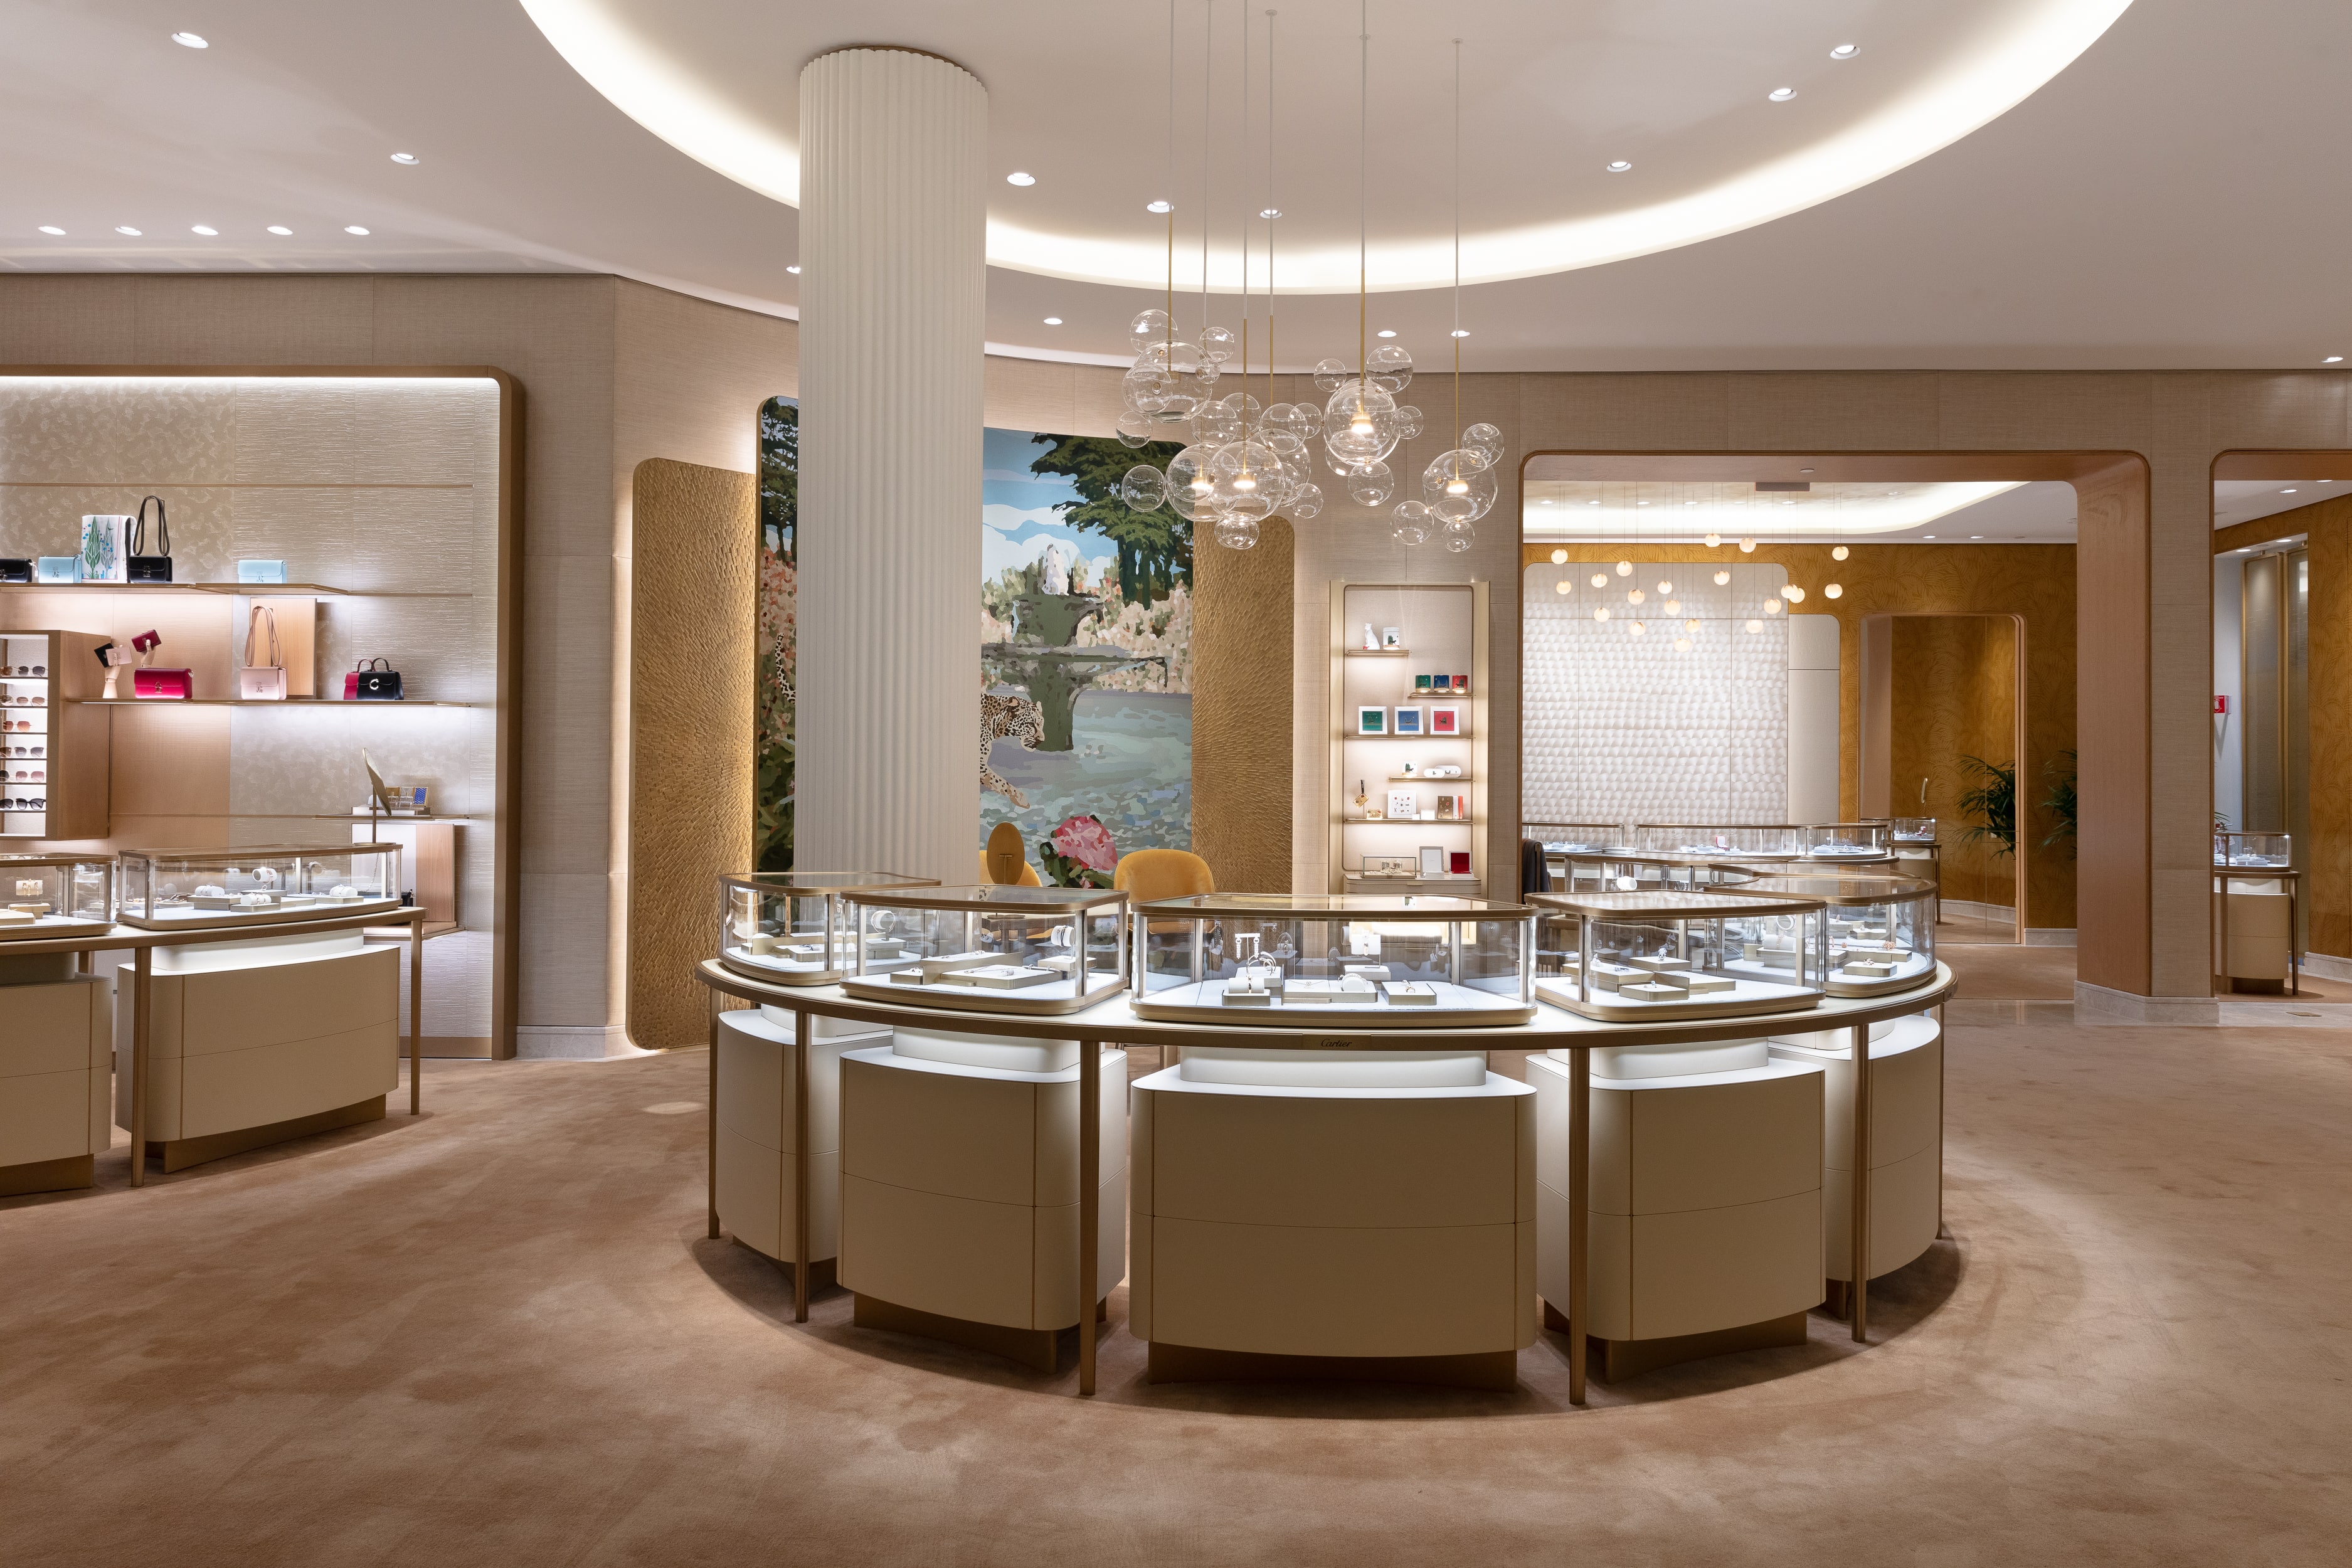 Cartier: fine jewelry, watches, accessories at 2855 Stevens Creek Blvd. -  Cartier